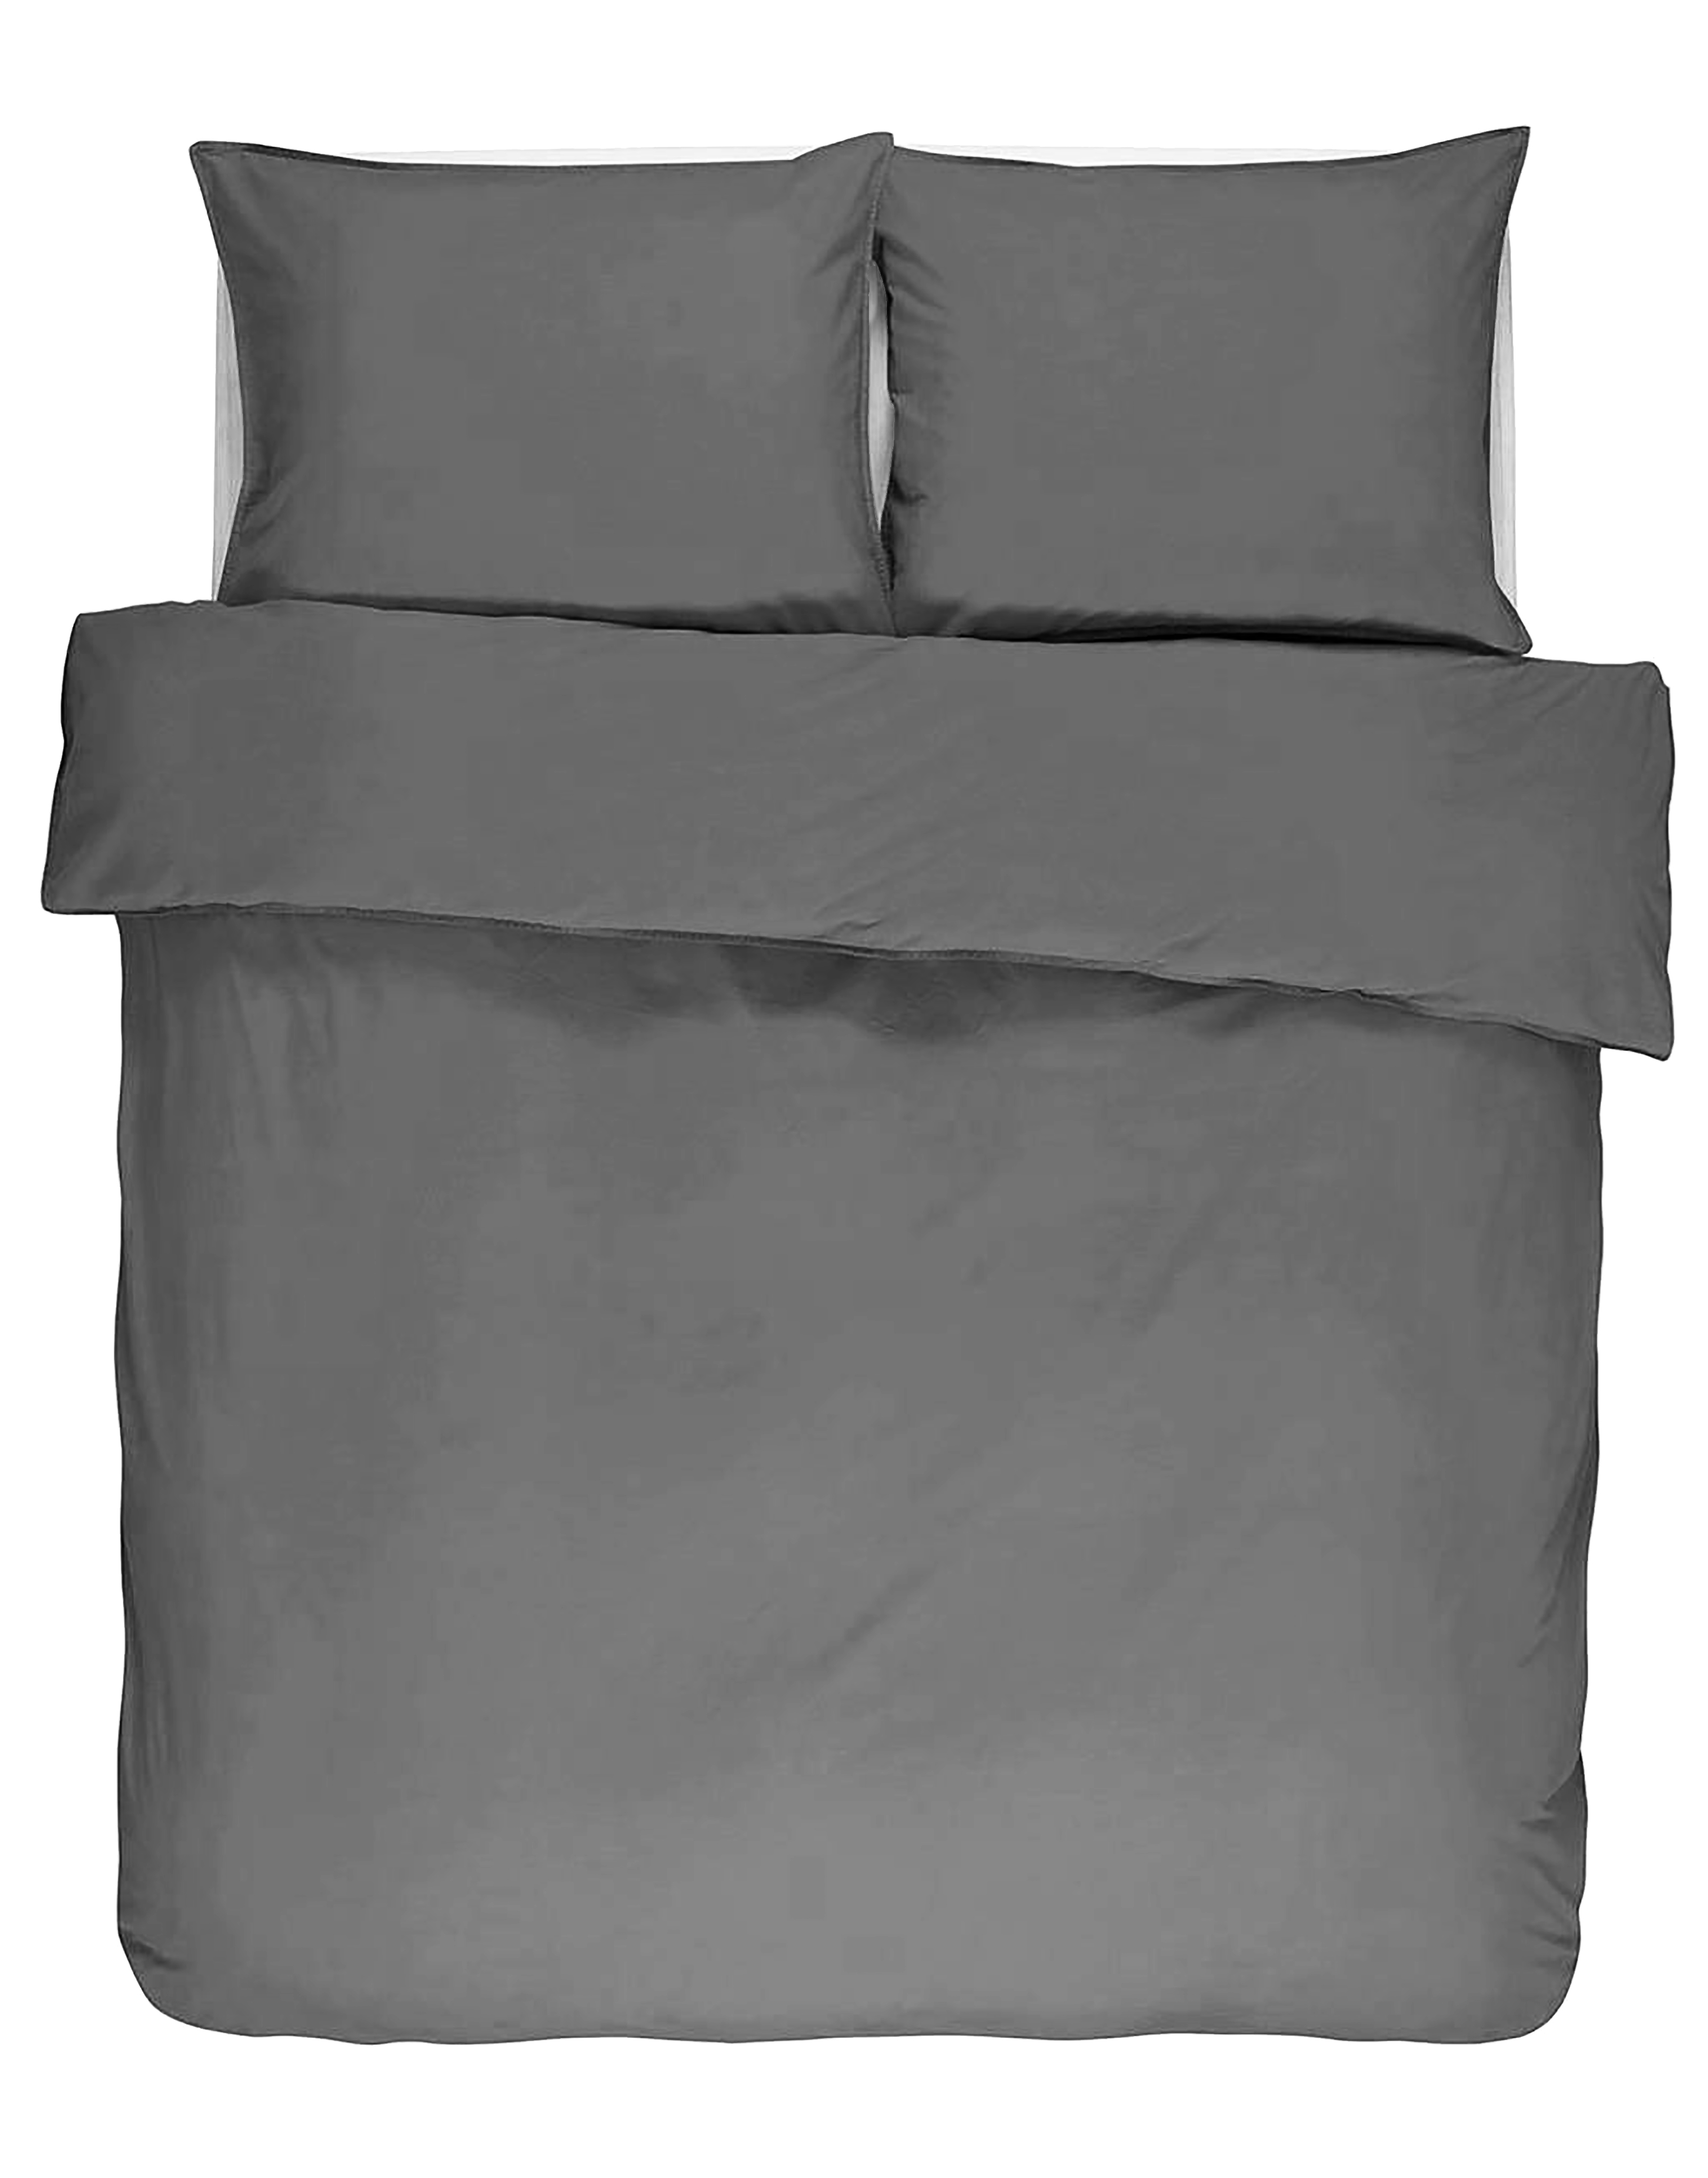 Duvet cover  IRIS,  Stone washed uni cotton, 240x220, grey